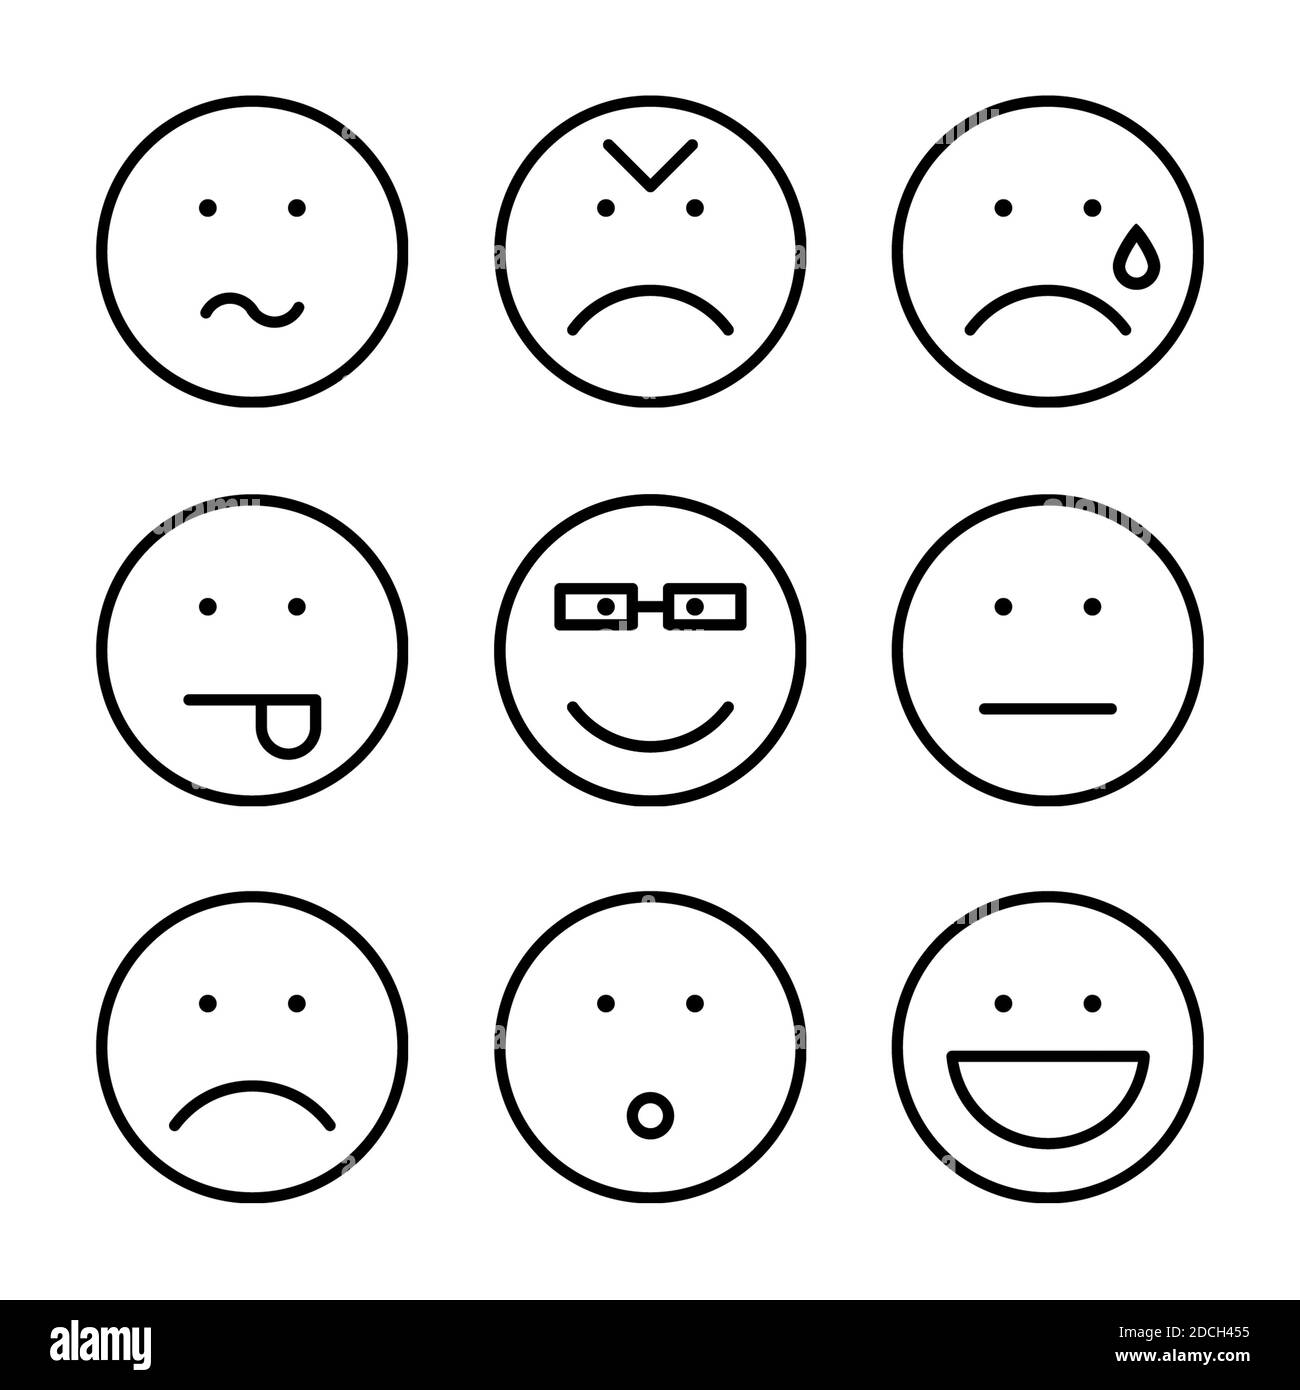 Line icons - symbols Emoji facial expression Stock Photo